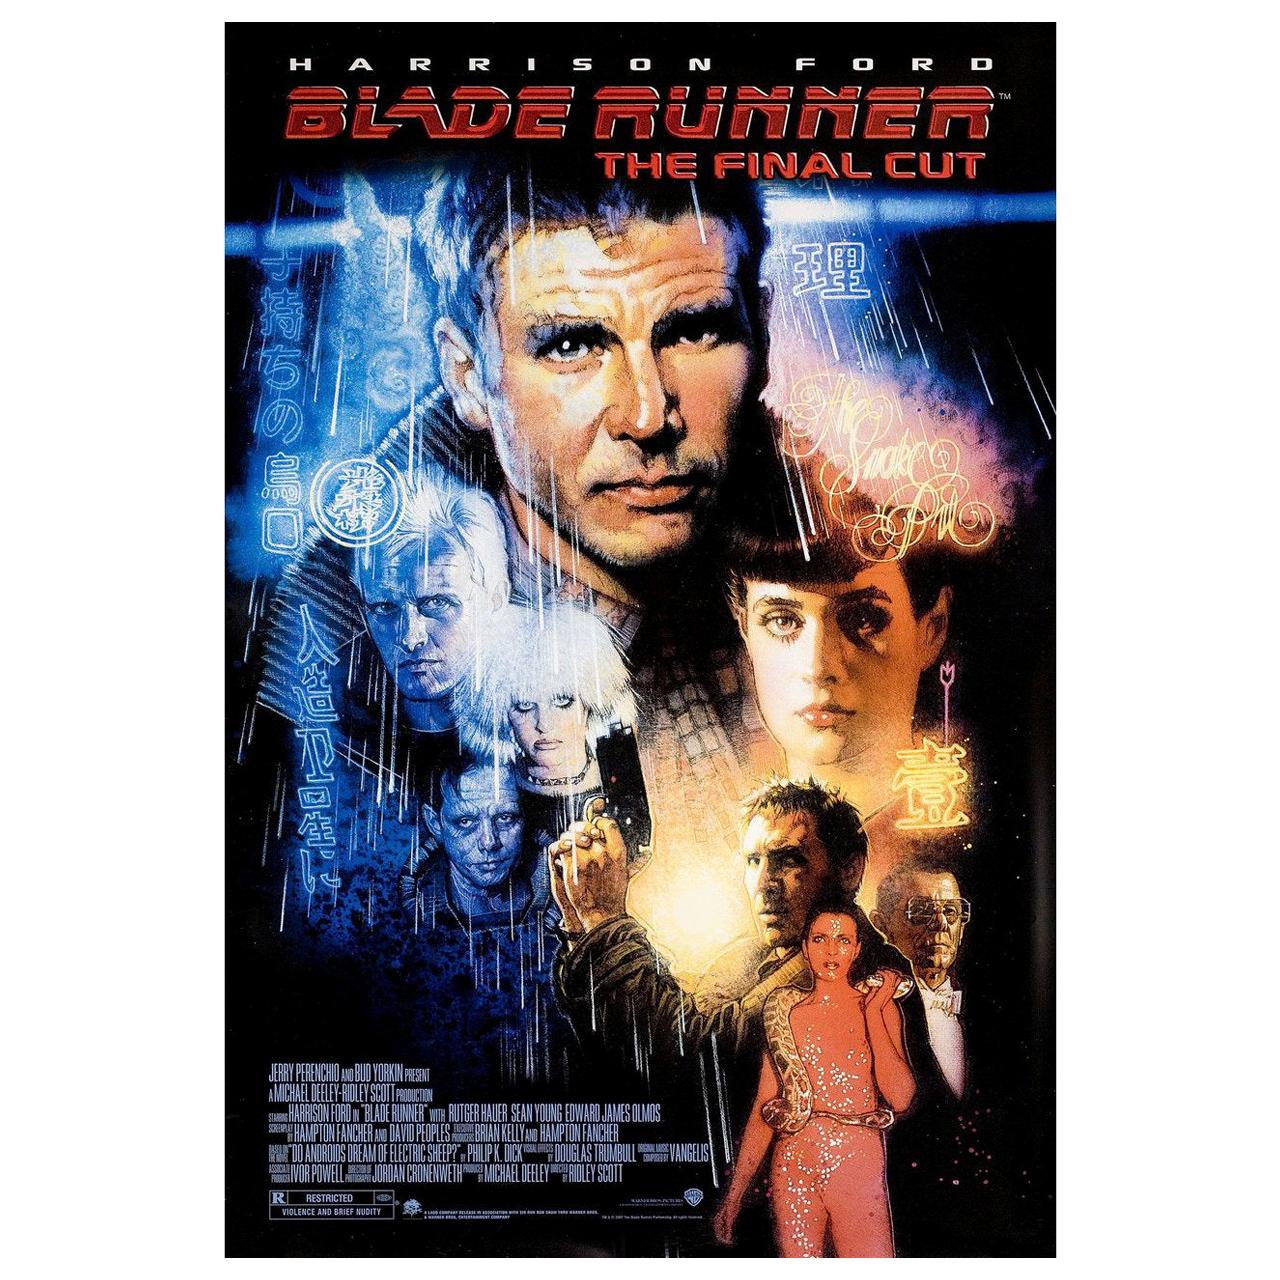 'Blade Runner' R2007 U.S. One Sheet Film Poster